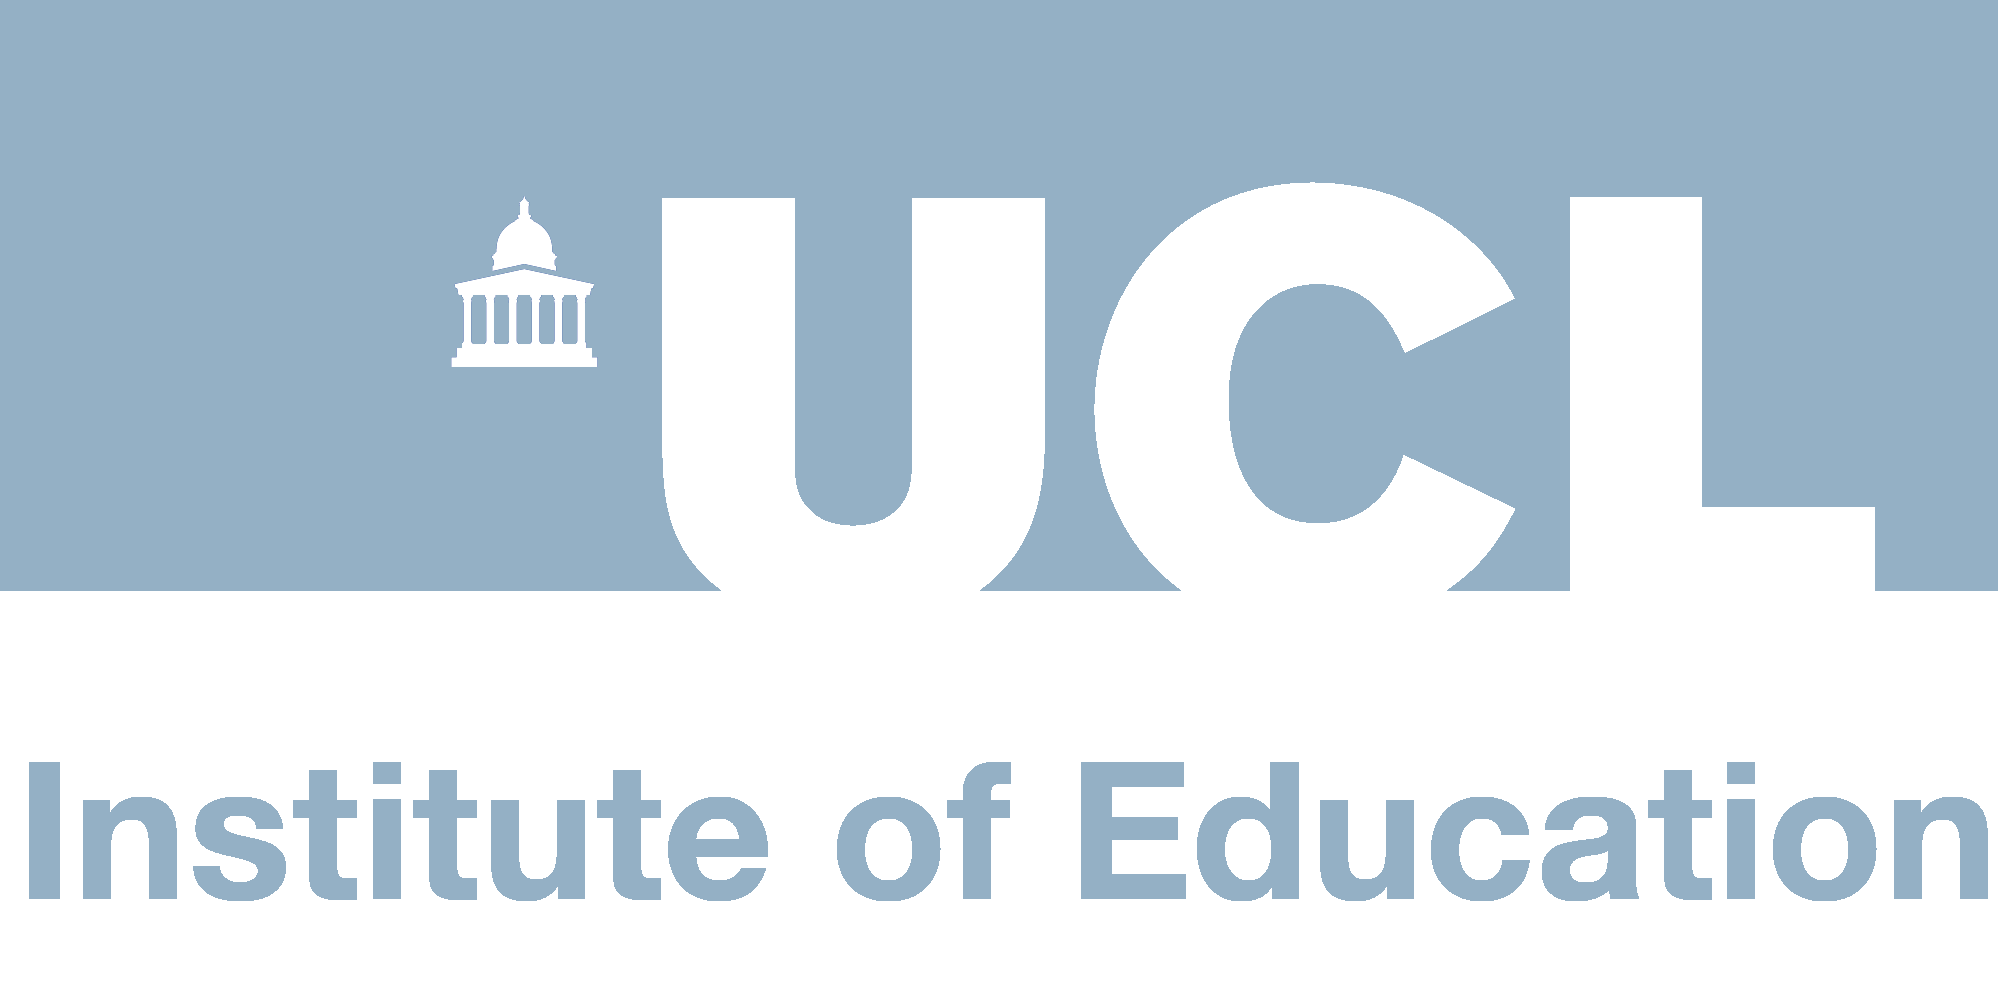 Logo UCL